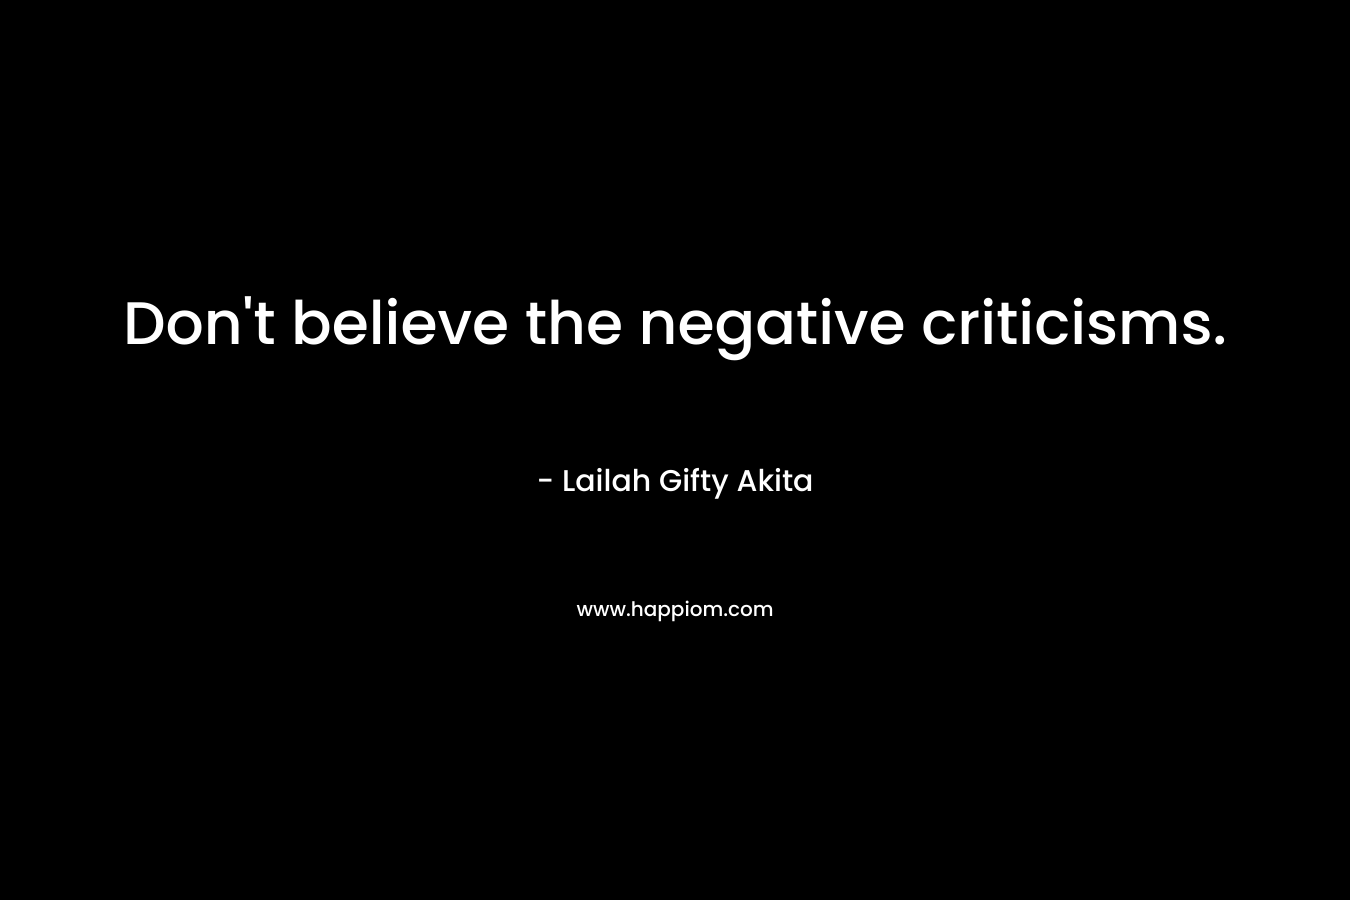 Don't believe the negative criticisms.